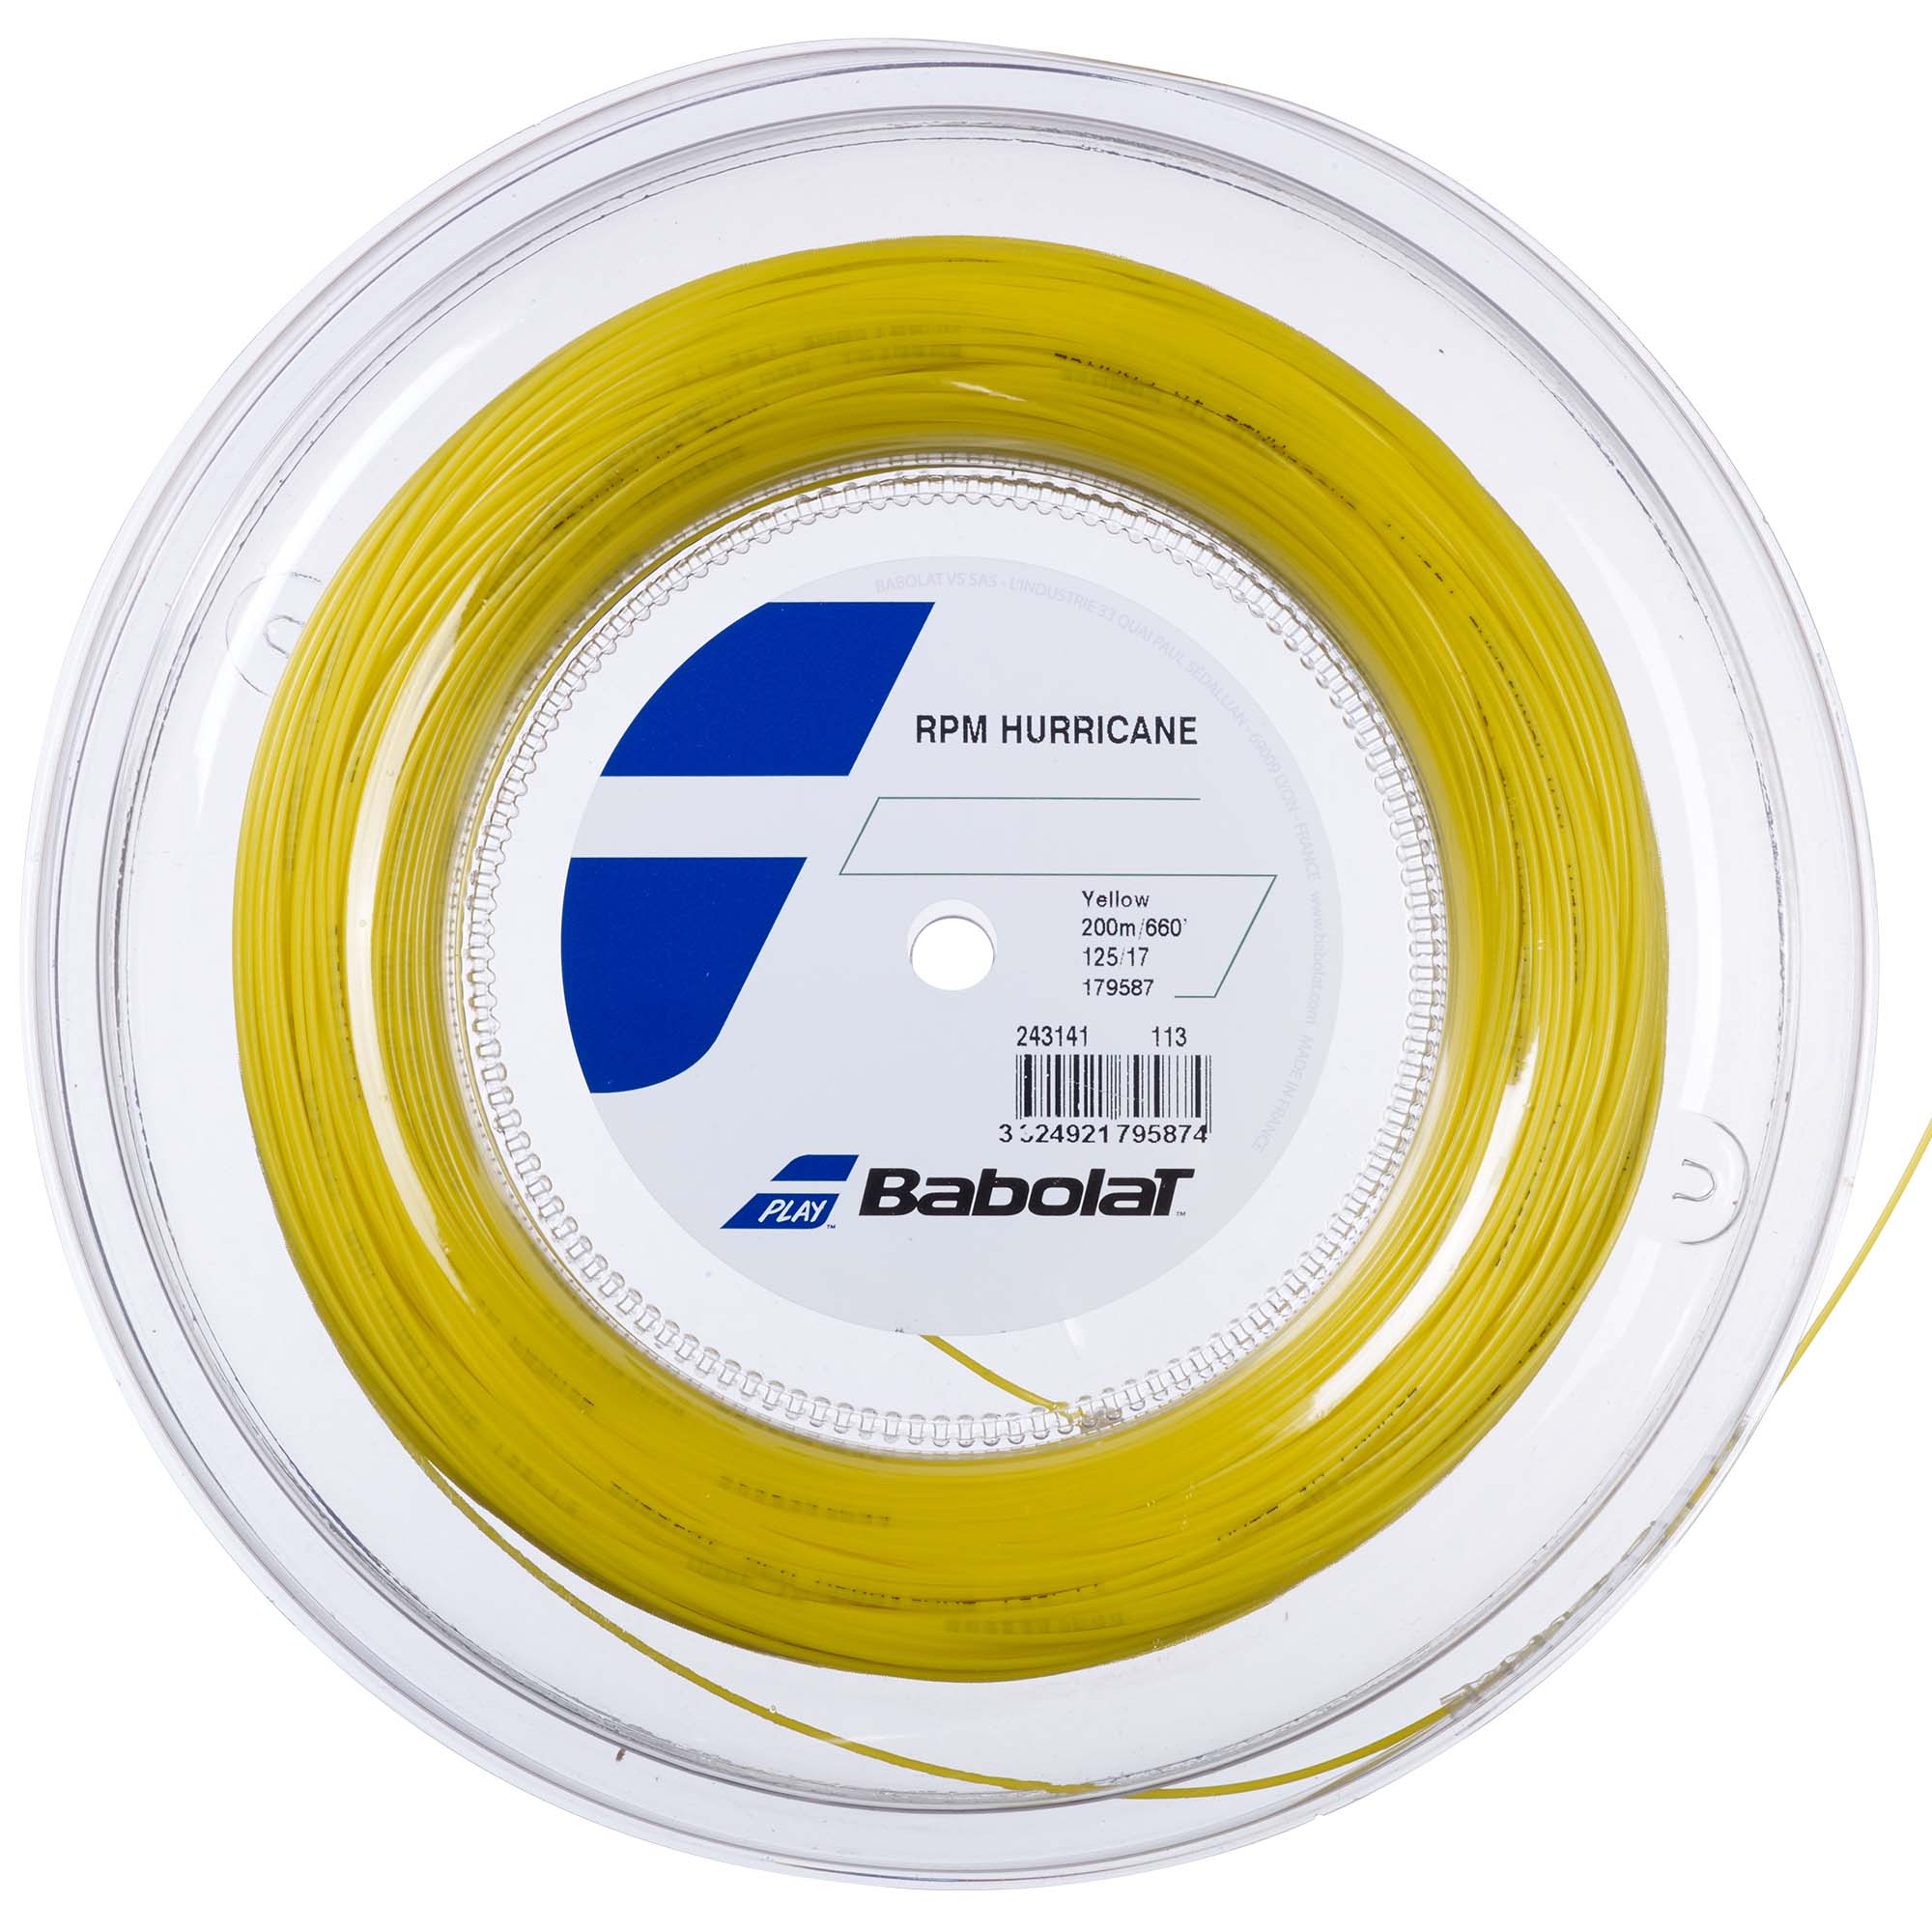 Babolat RPM Hurricane Tennis String - 200m Reel